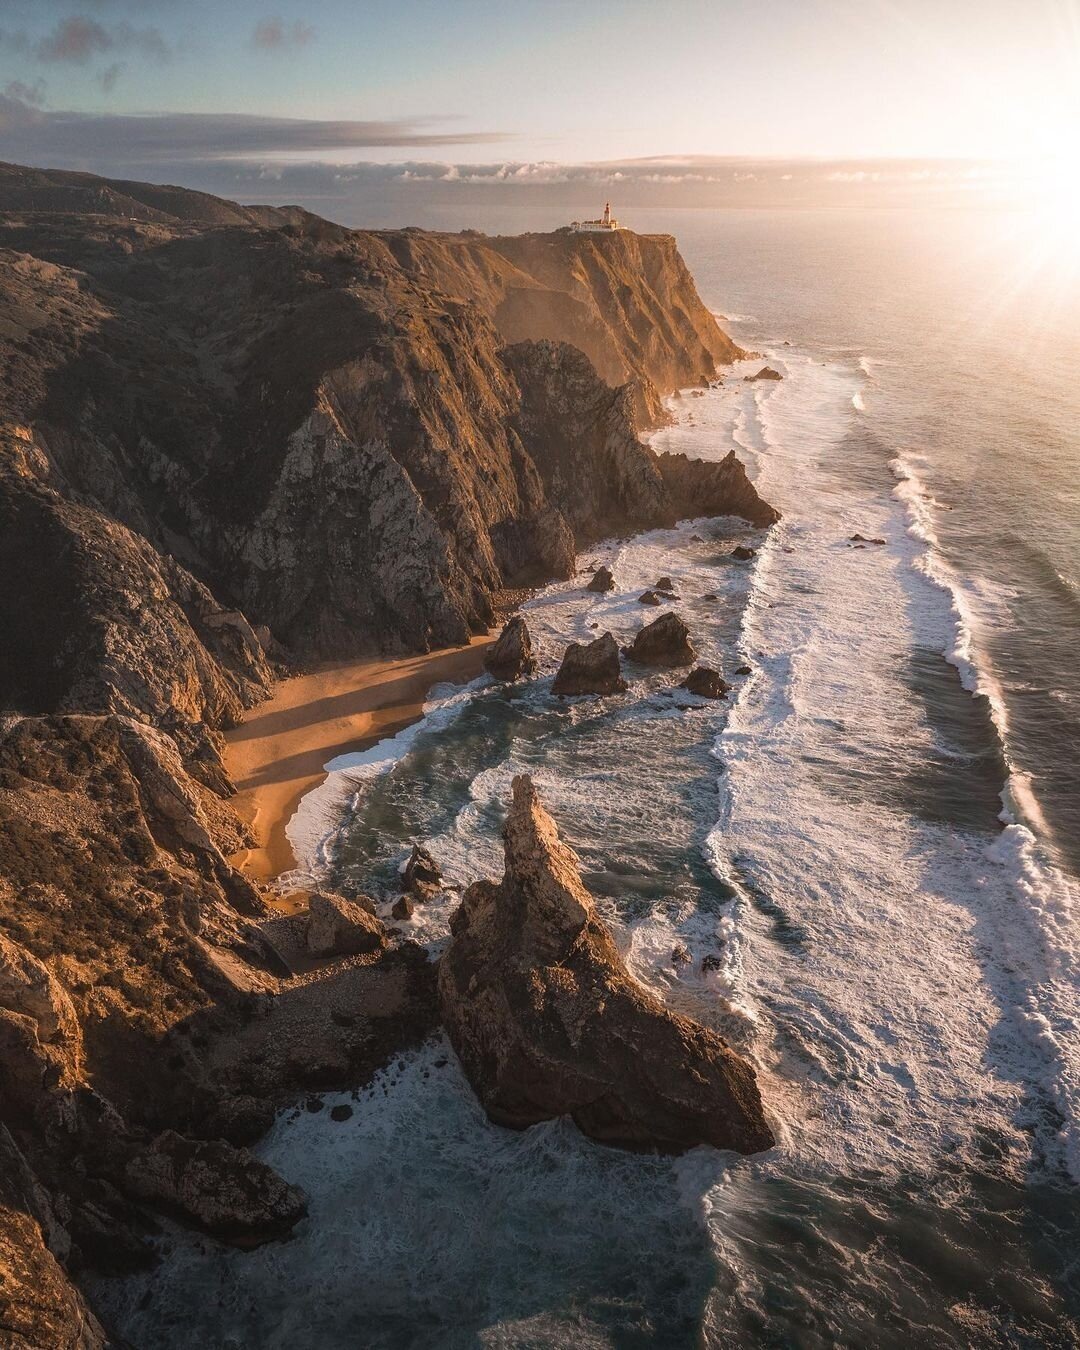 The coast of Portugal | by @braybraywoowoo⁠
&ndash; #staffpick #droneheroes